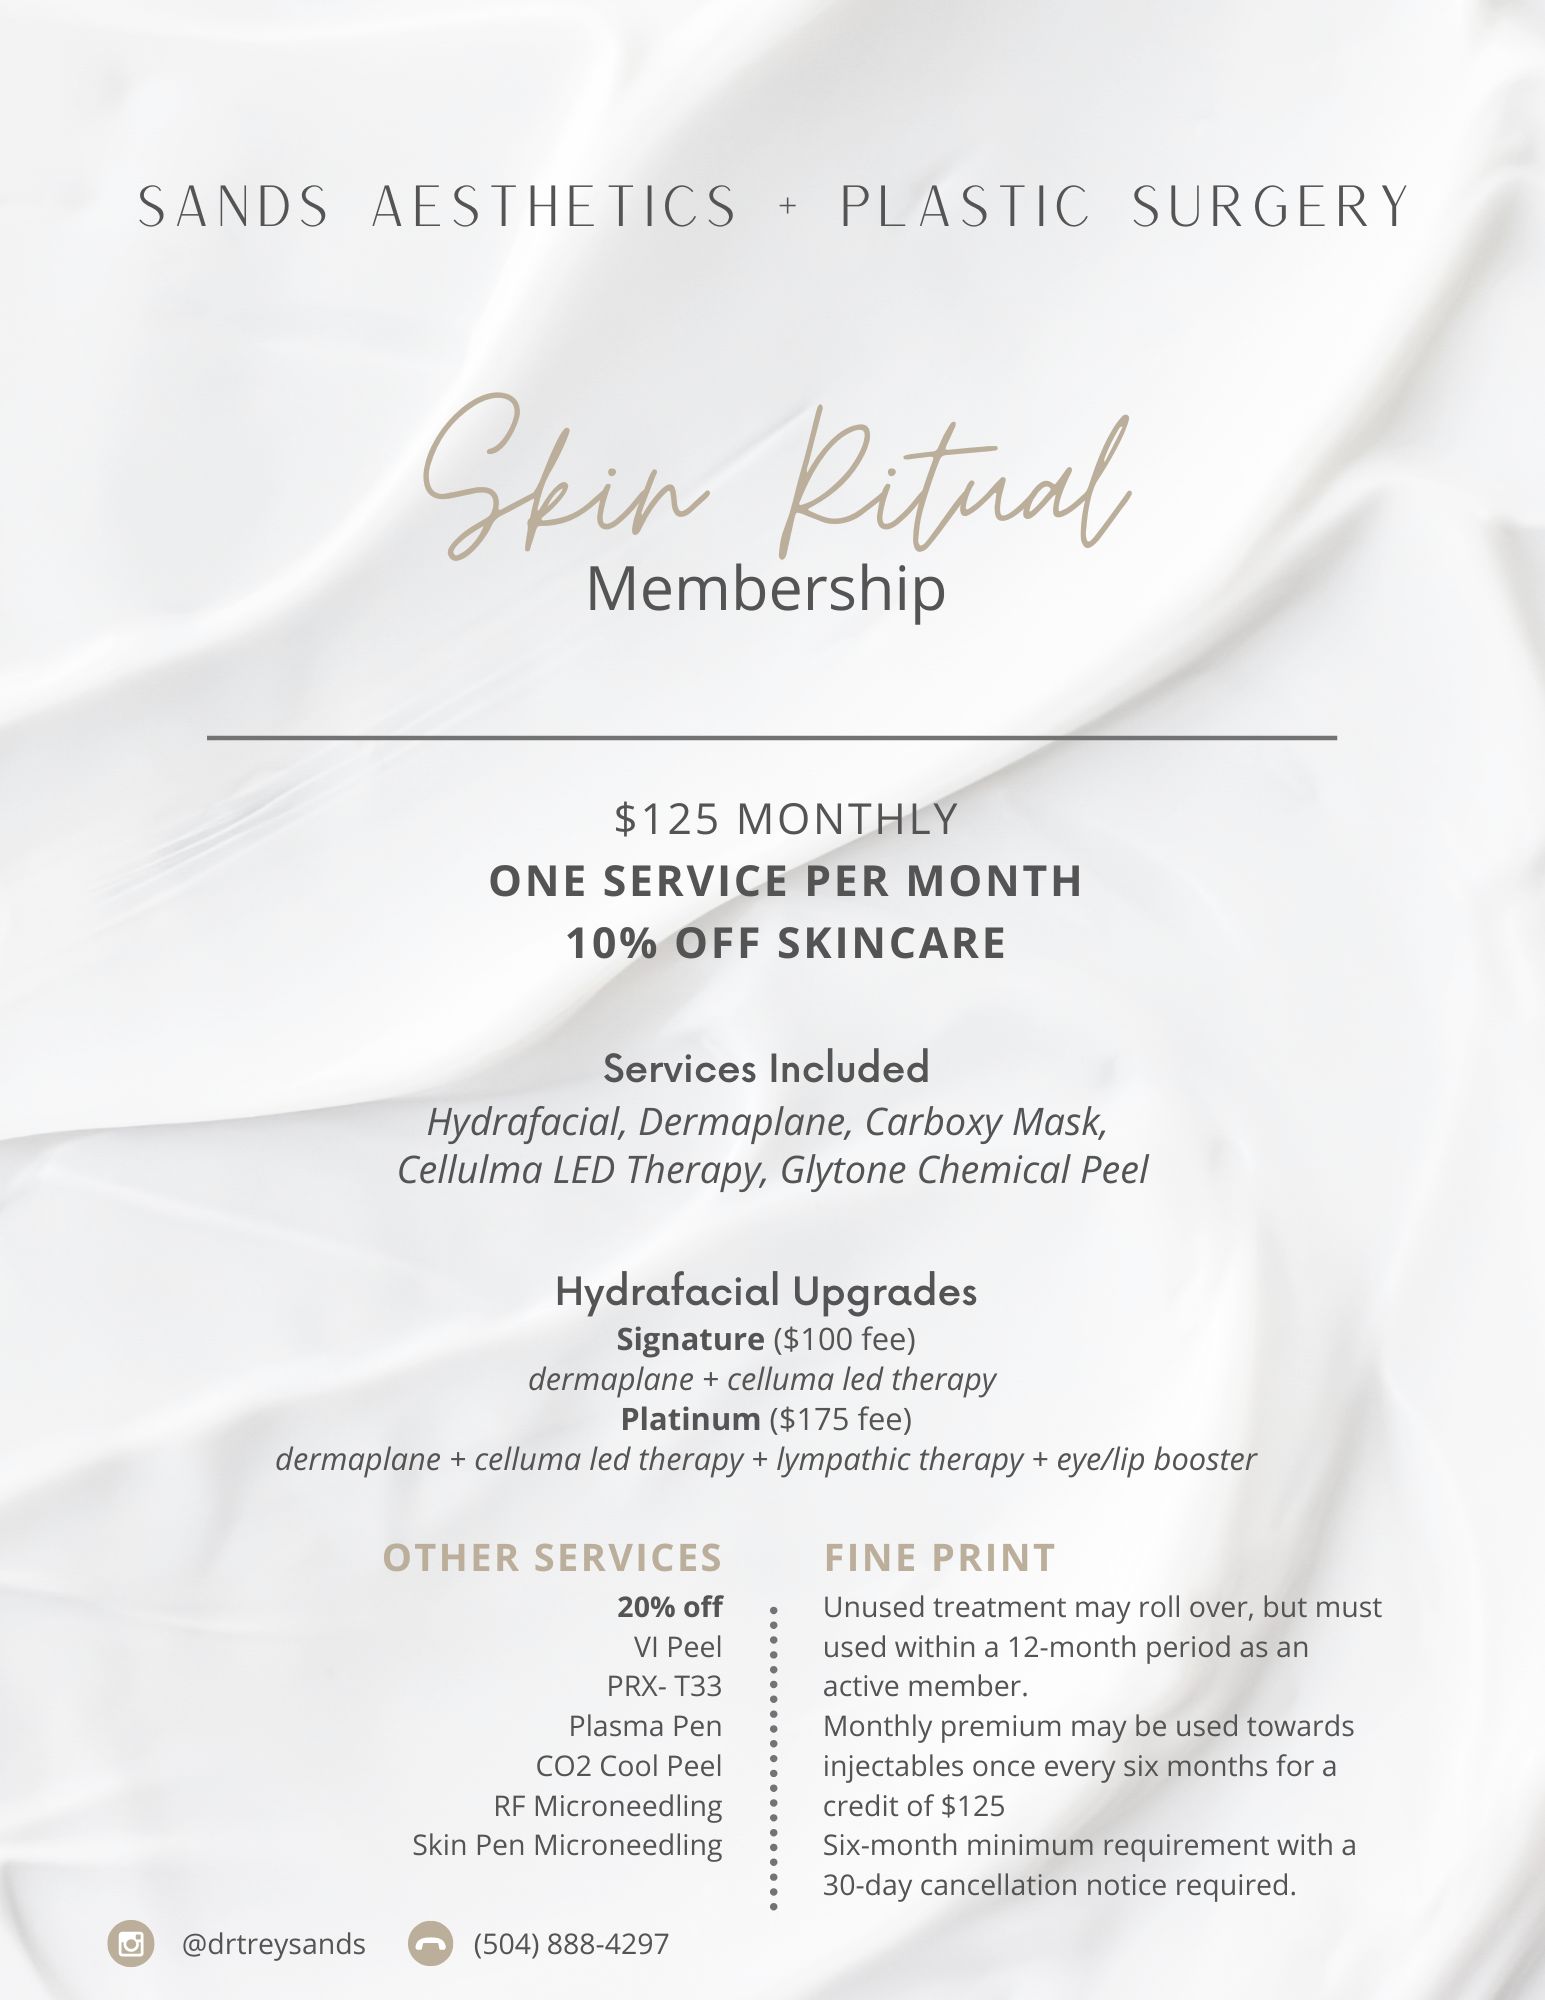 Sands Aesthetics Plastic Surgery membership rates info in Metairie, LA